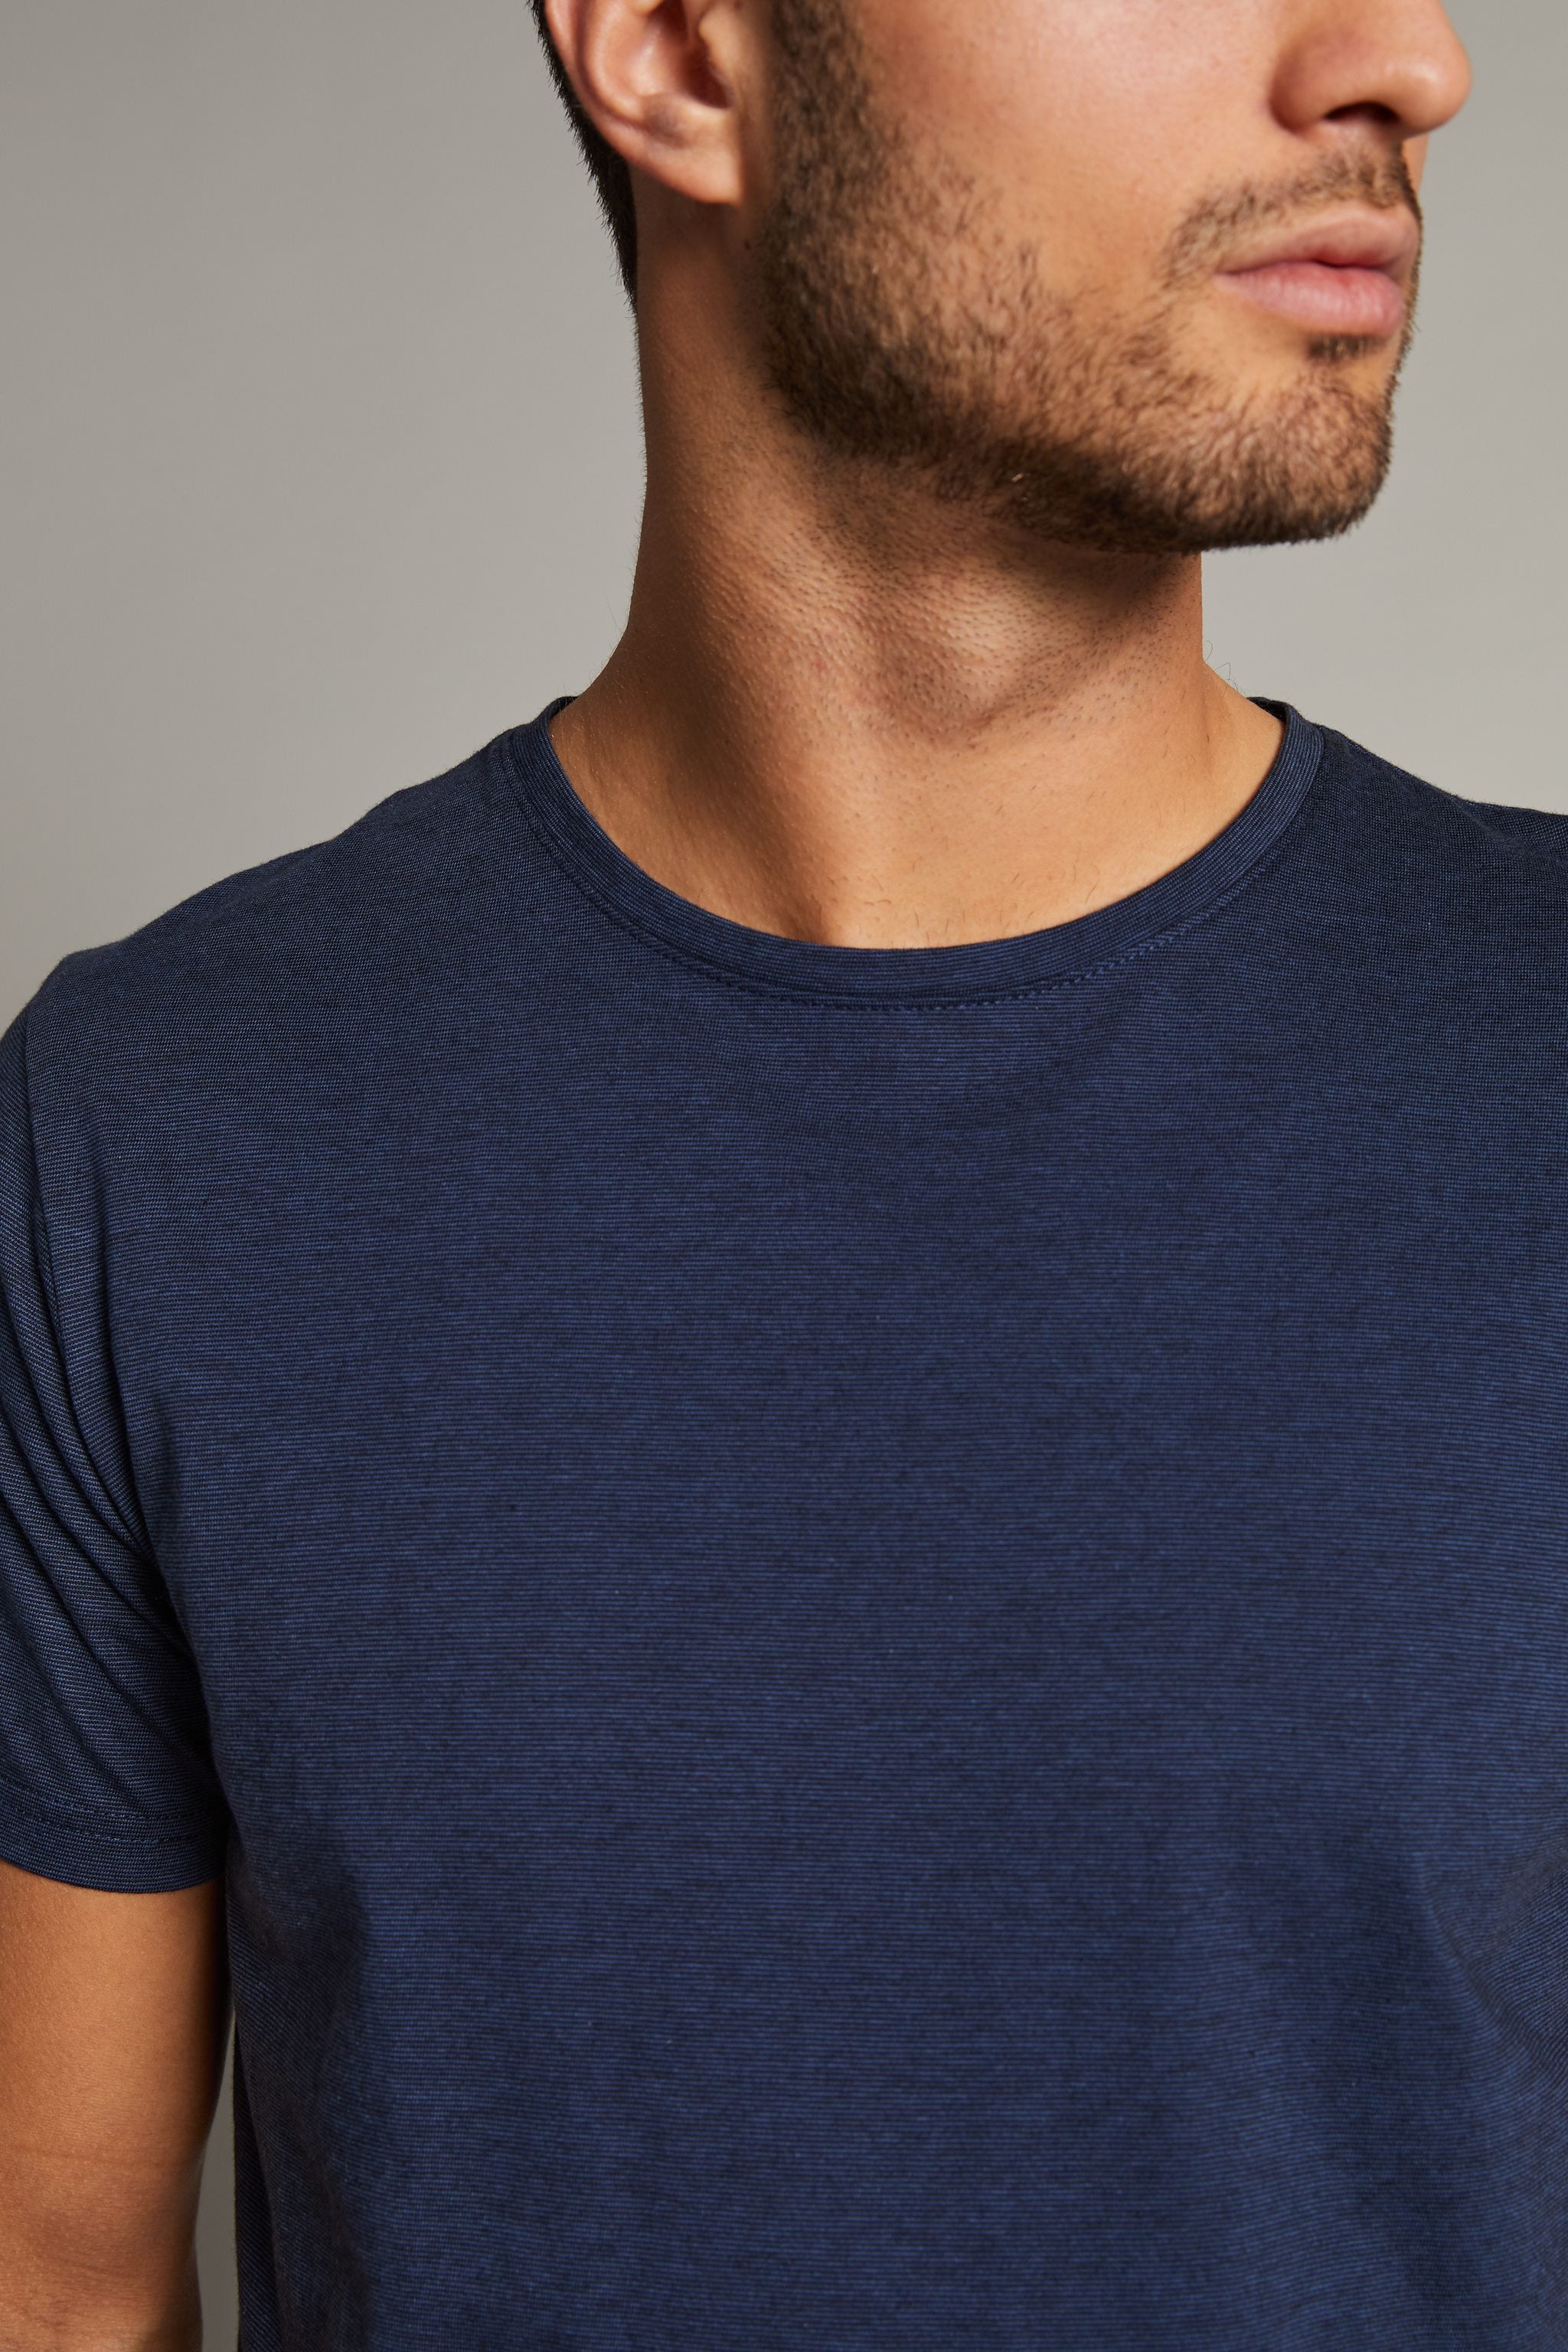 Jermane Mini Stripe T-Shirt in Sharp Blue, T shirts for men, stripe t shirts for men, t shirt design